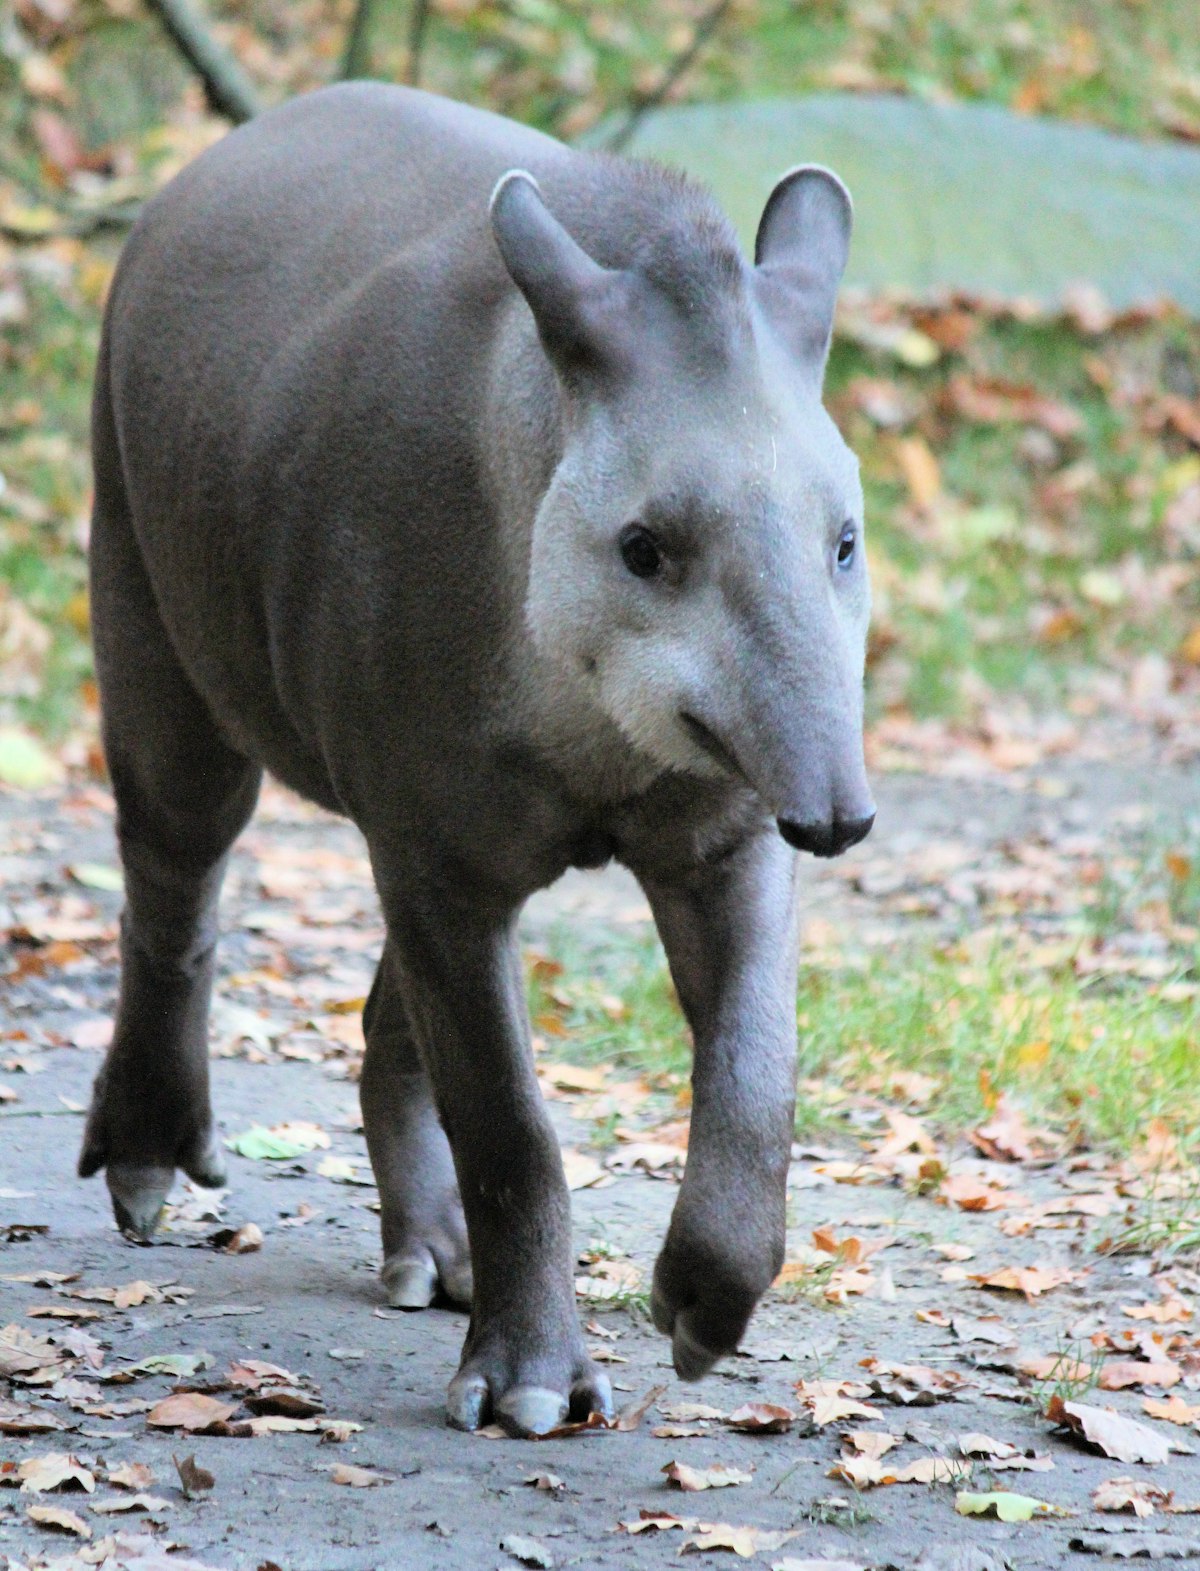 An endangered tapir calf was born in the UK!